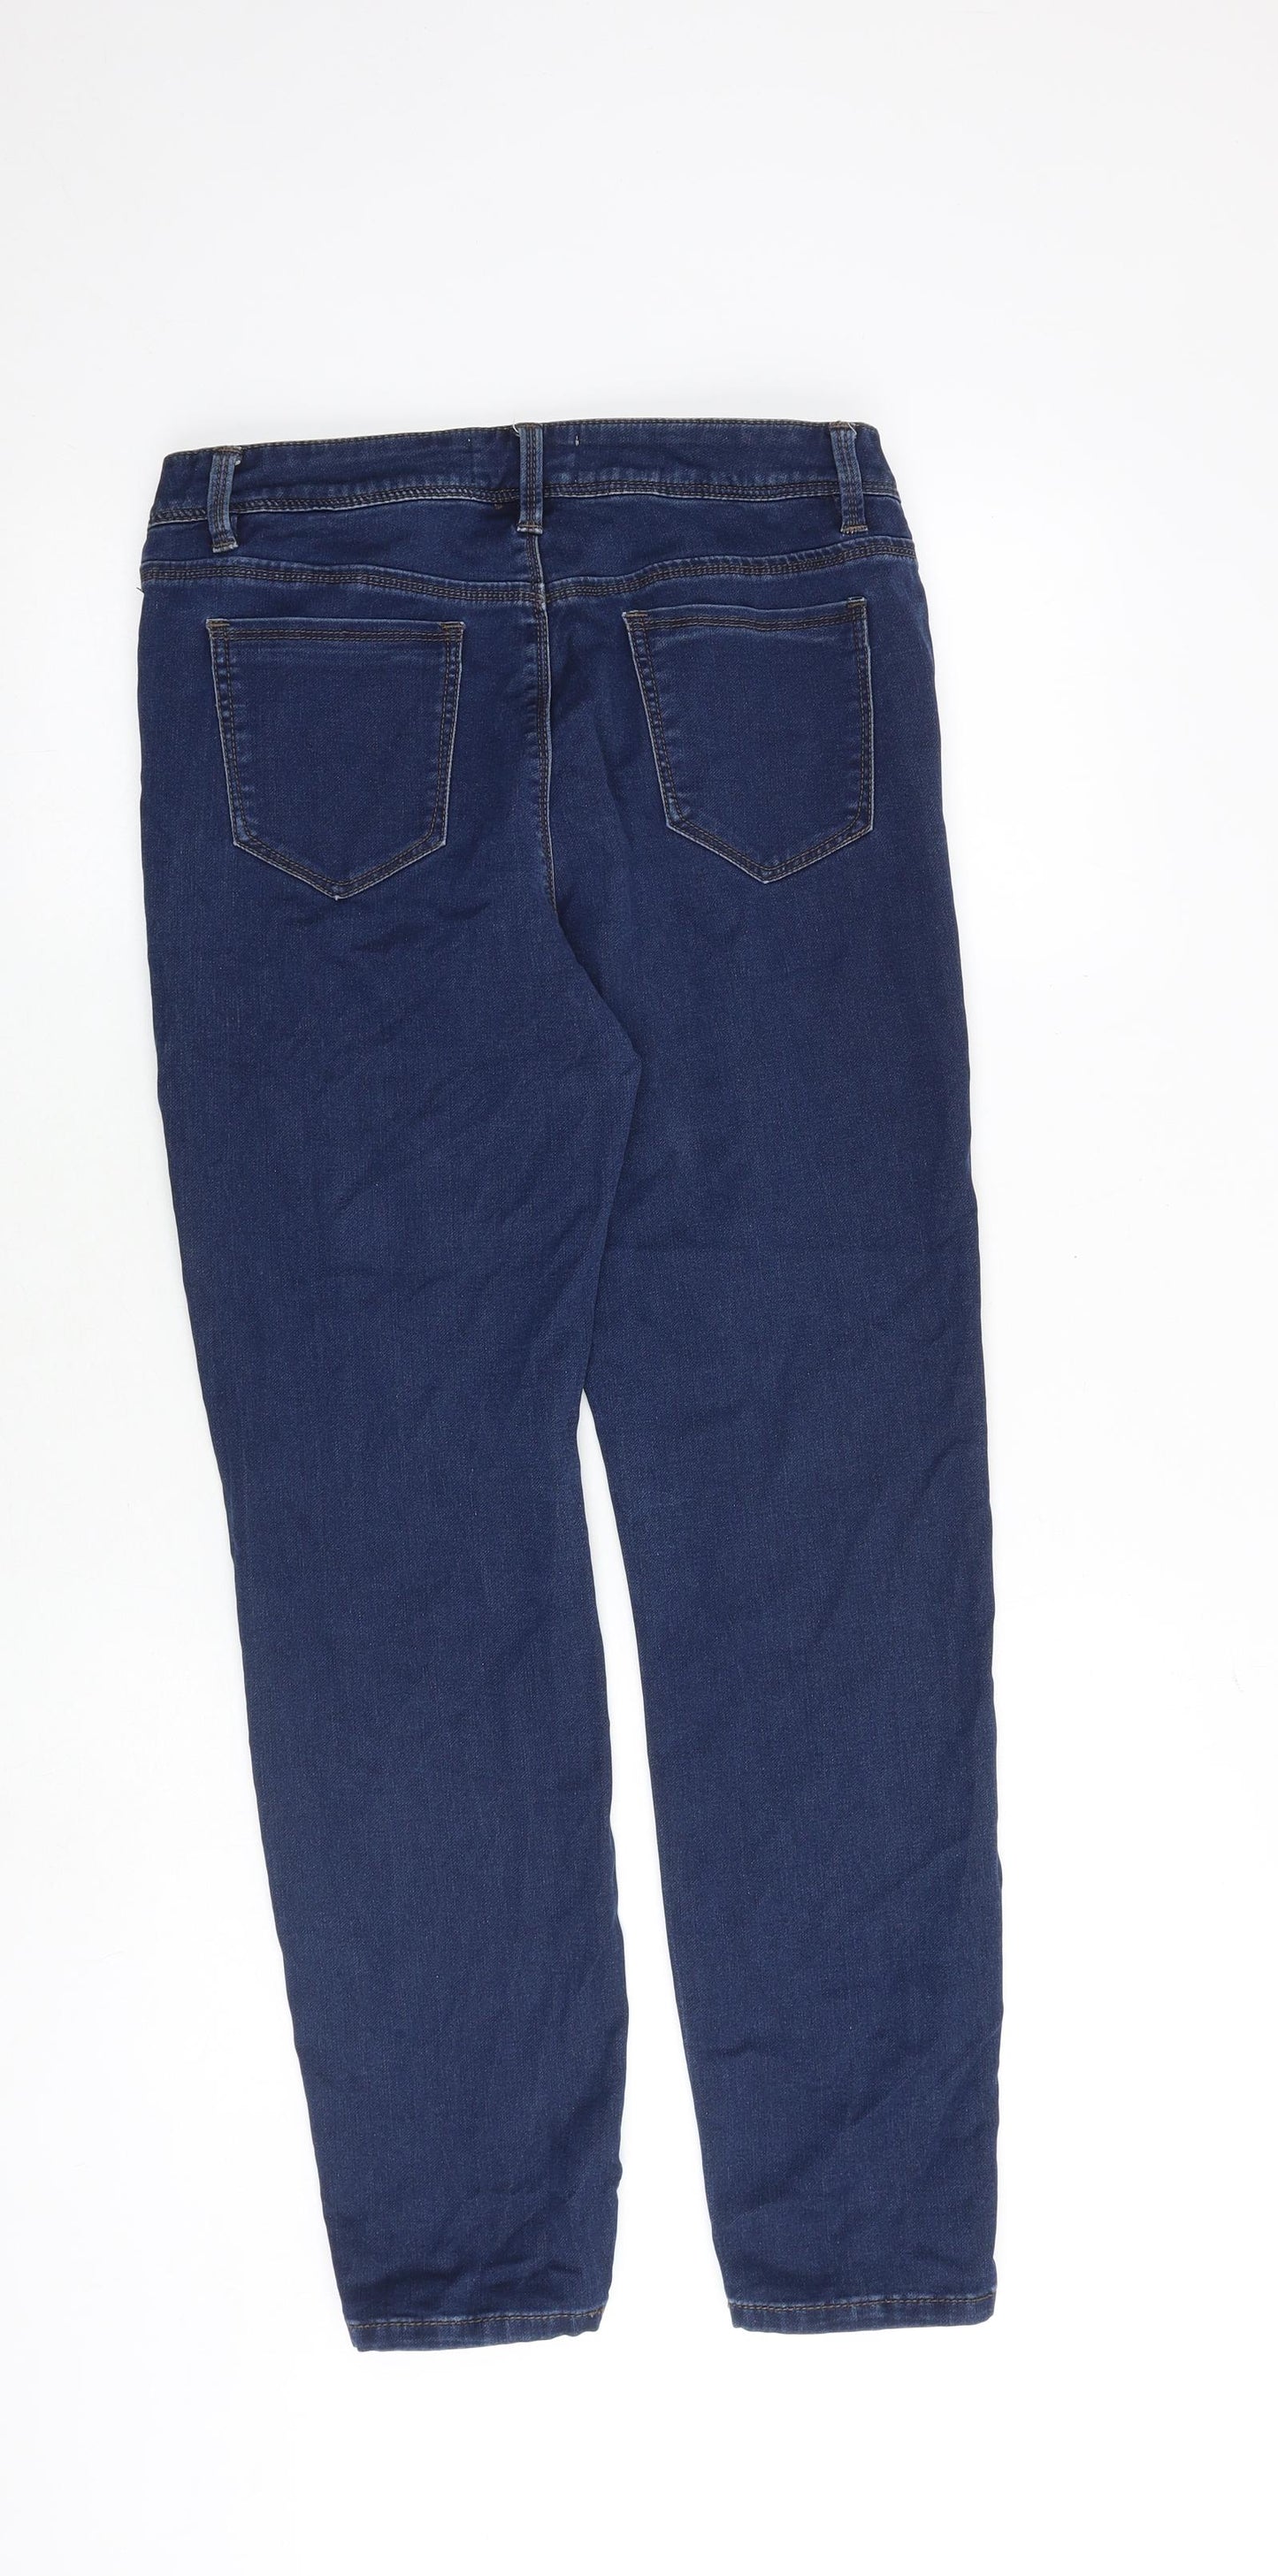 Premium Denim Collection Womens Blue Cotton Skinny Jeans Size 12 Extra-Slim Zip